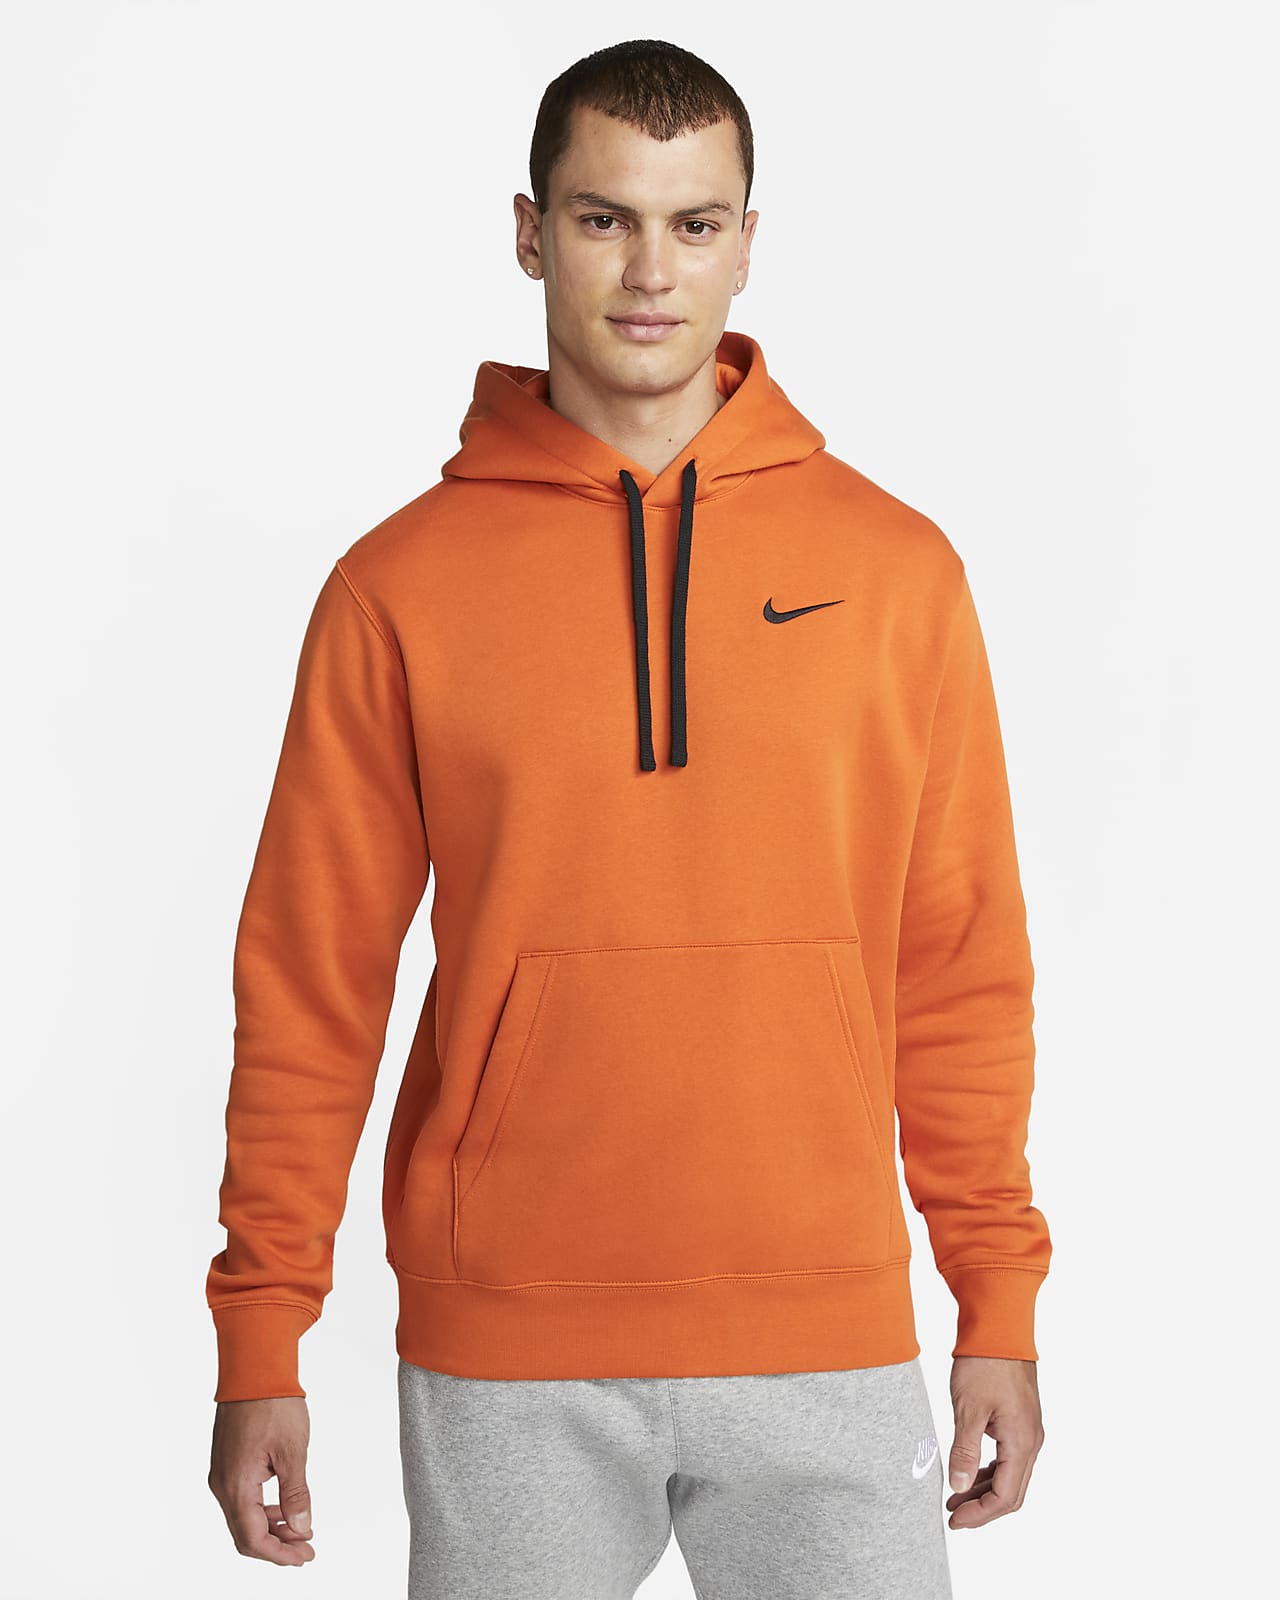 Conveniente vóleibol pared Netherlands Club Fleece Men's Pullover Hoodie. Nike.com